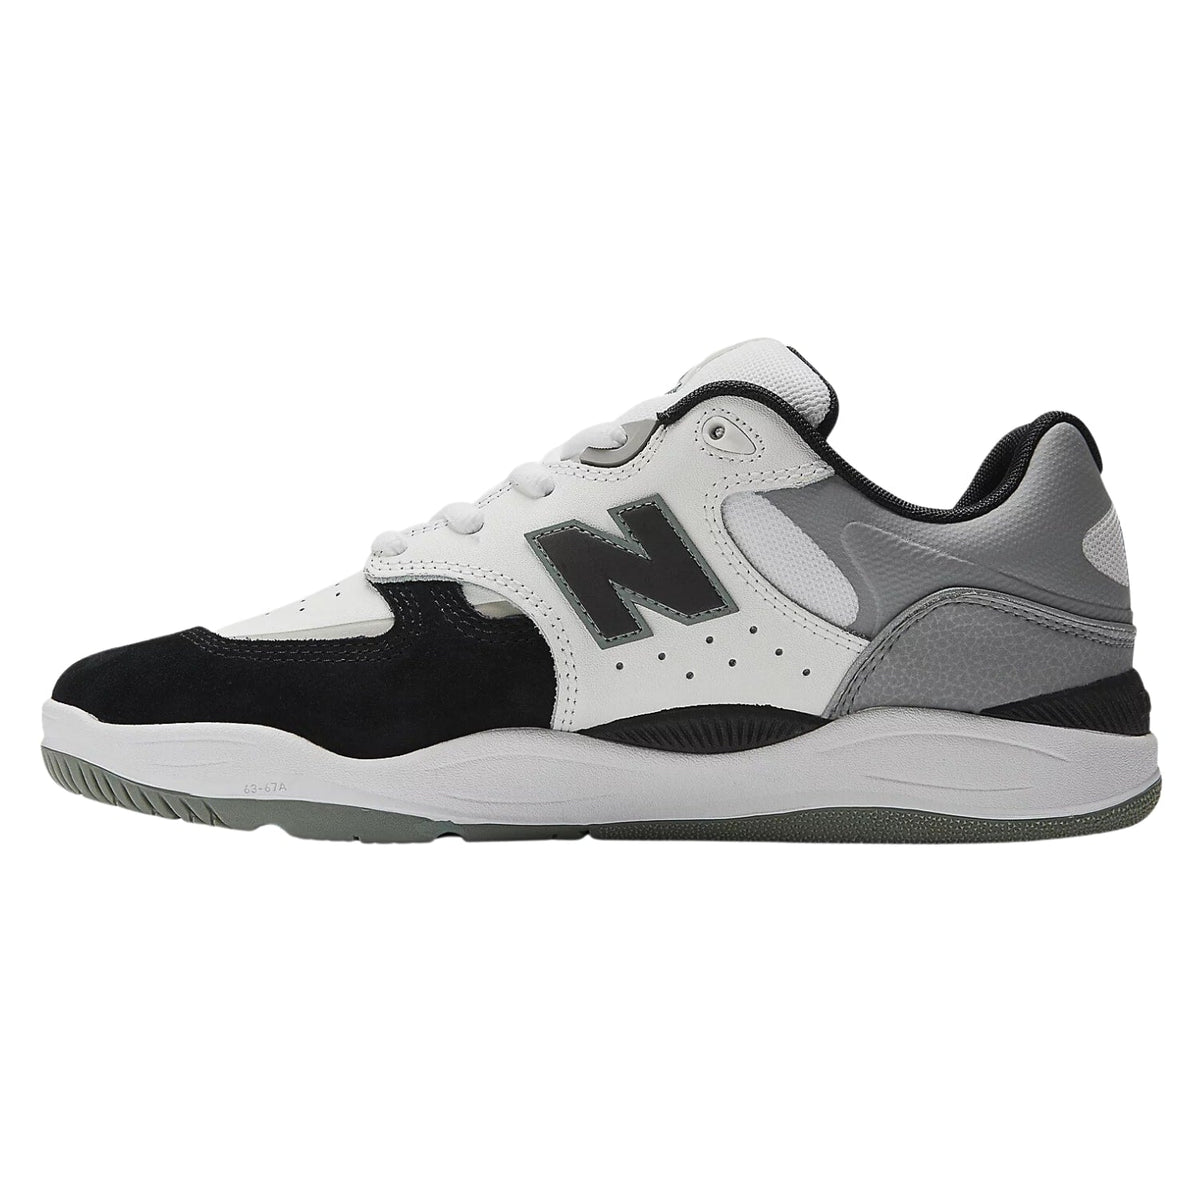 New Balance Numeric NM1010 Tiago Skate Shoes - White/Black